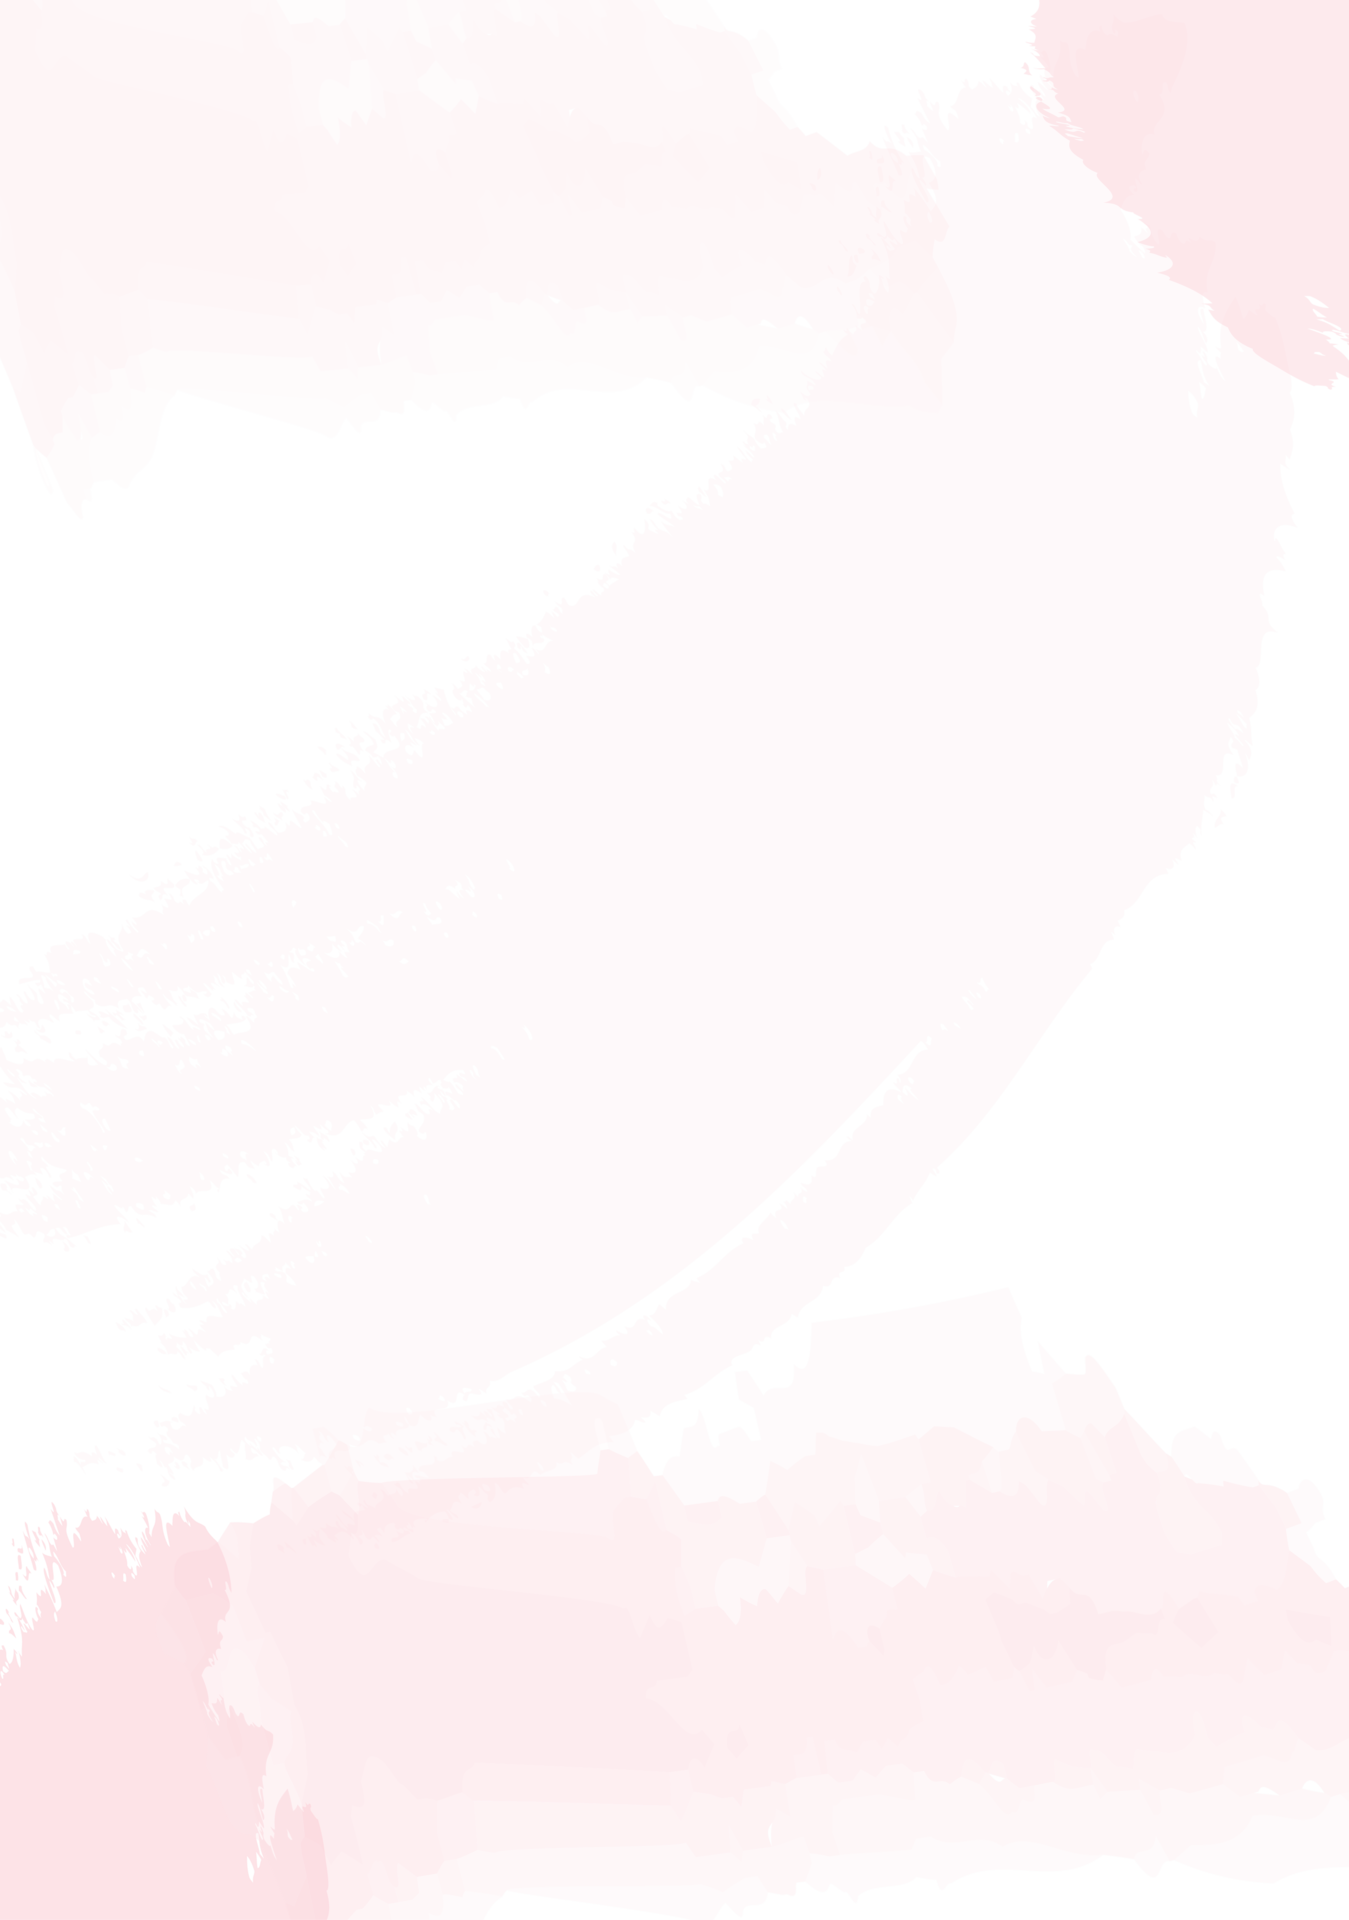 Watercolor Pink Splash Transparency Background 13641522 Png